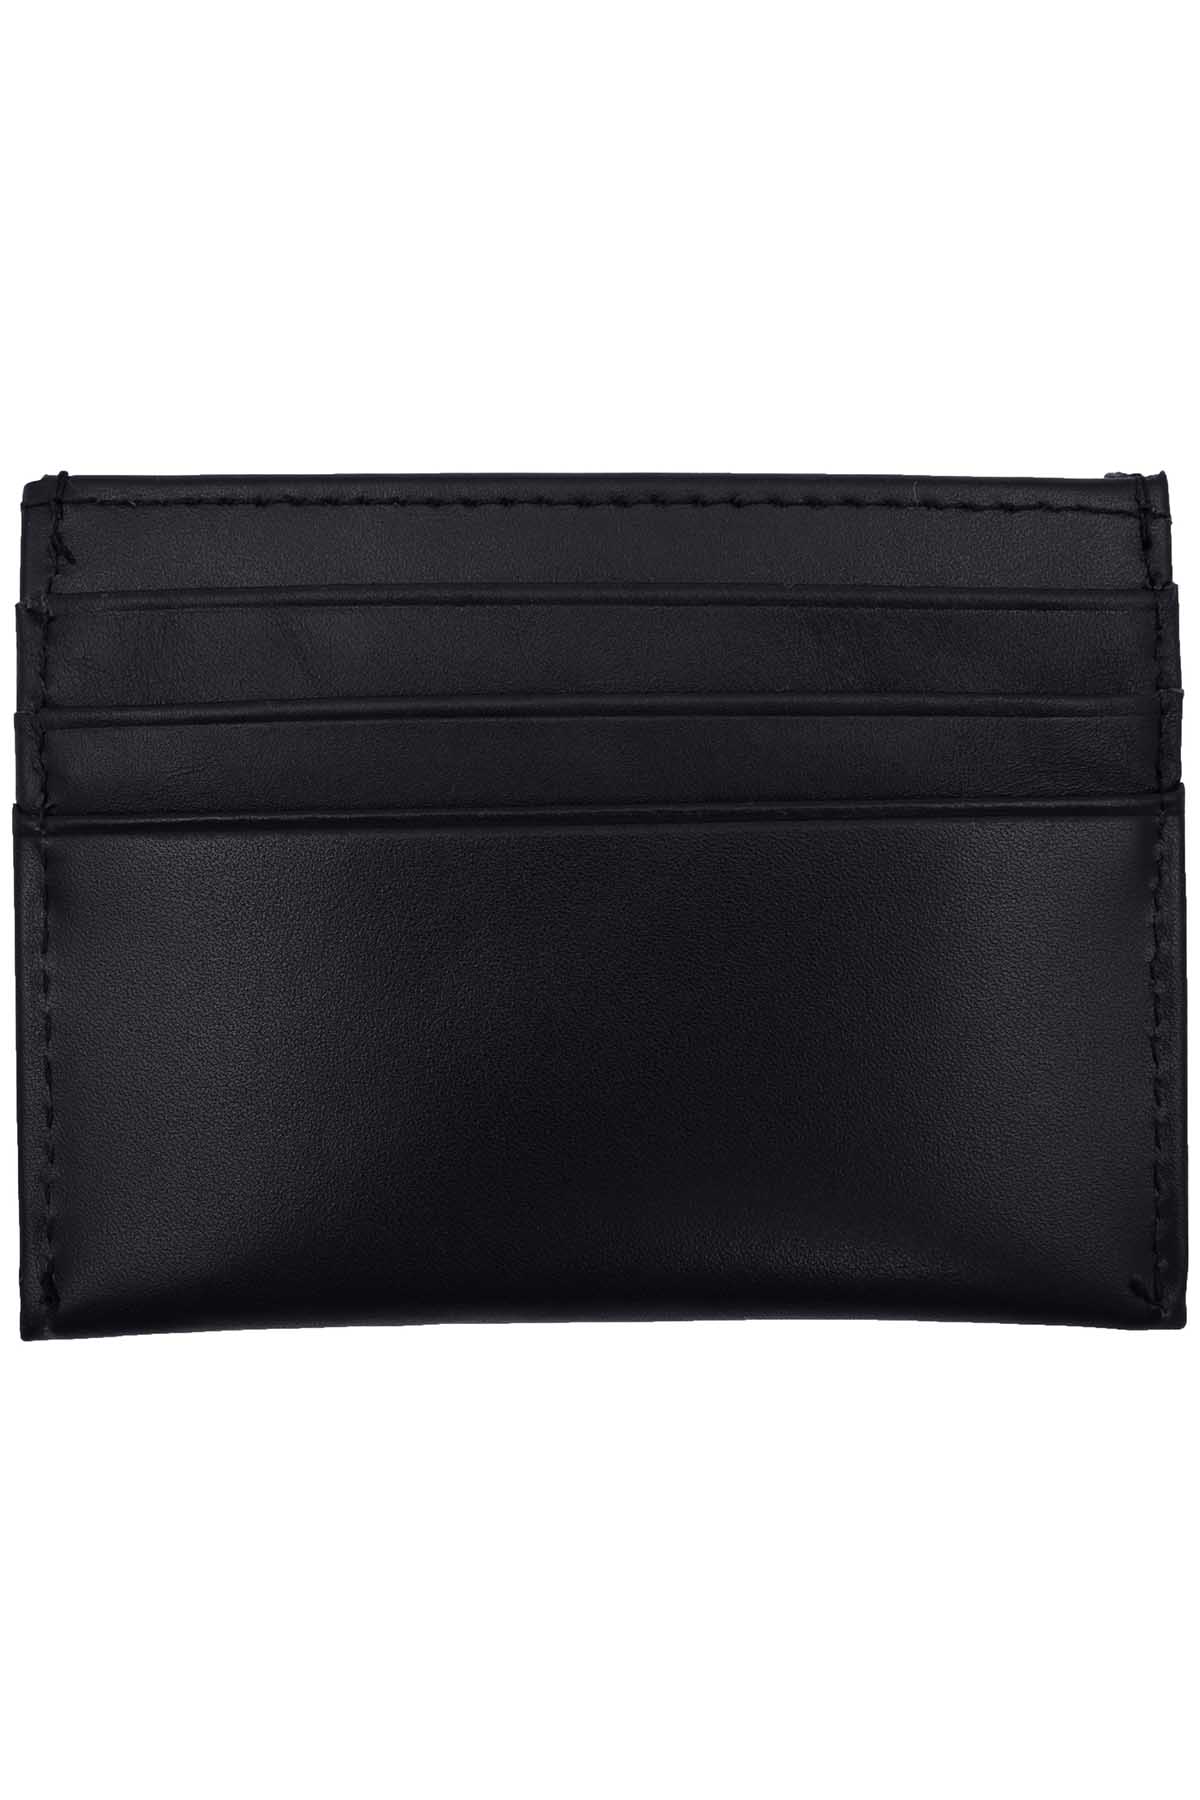 DIBI Black Slim Leather Wallet